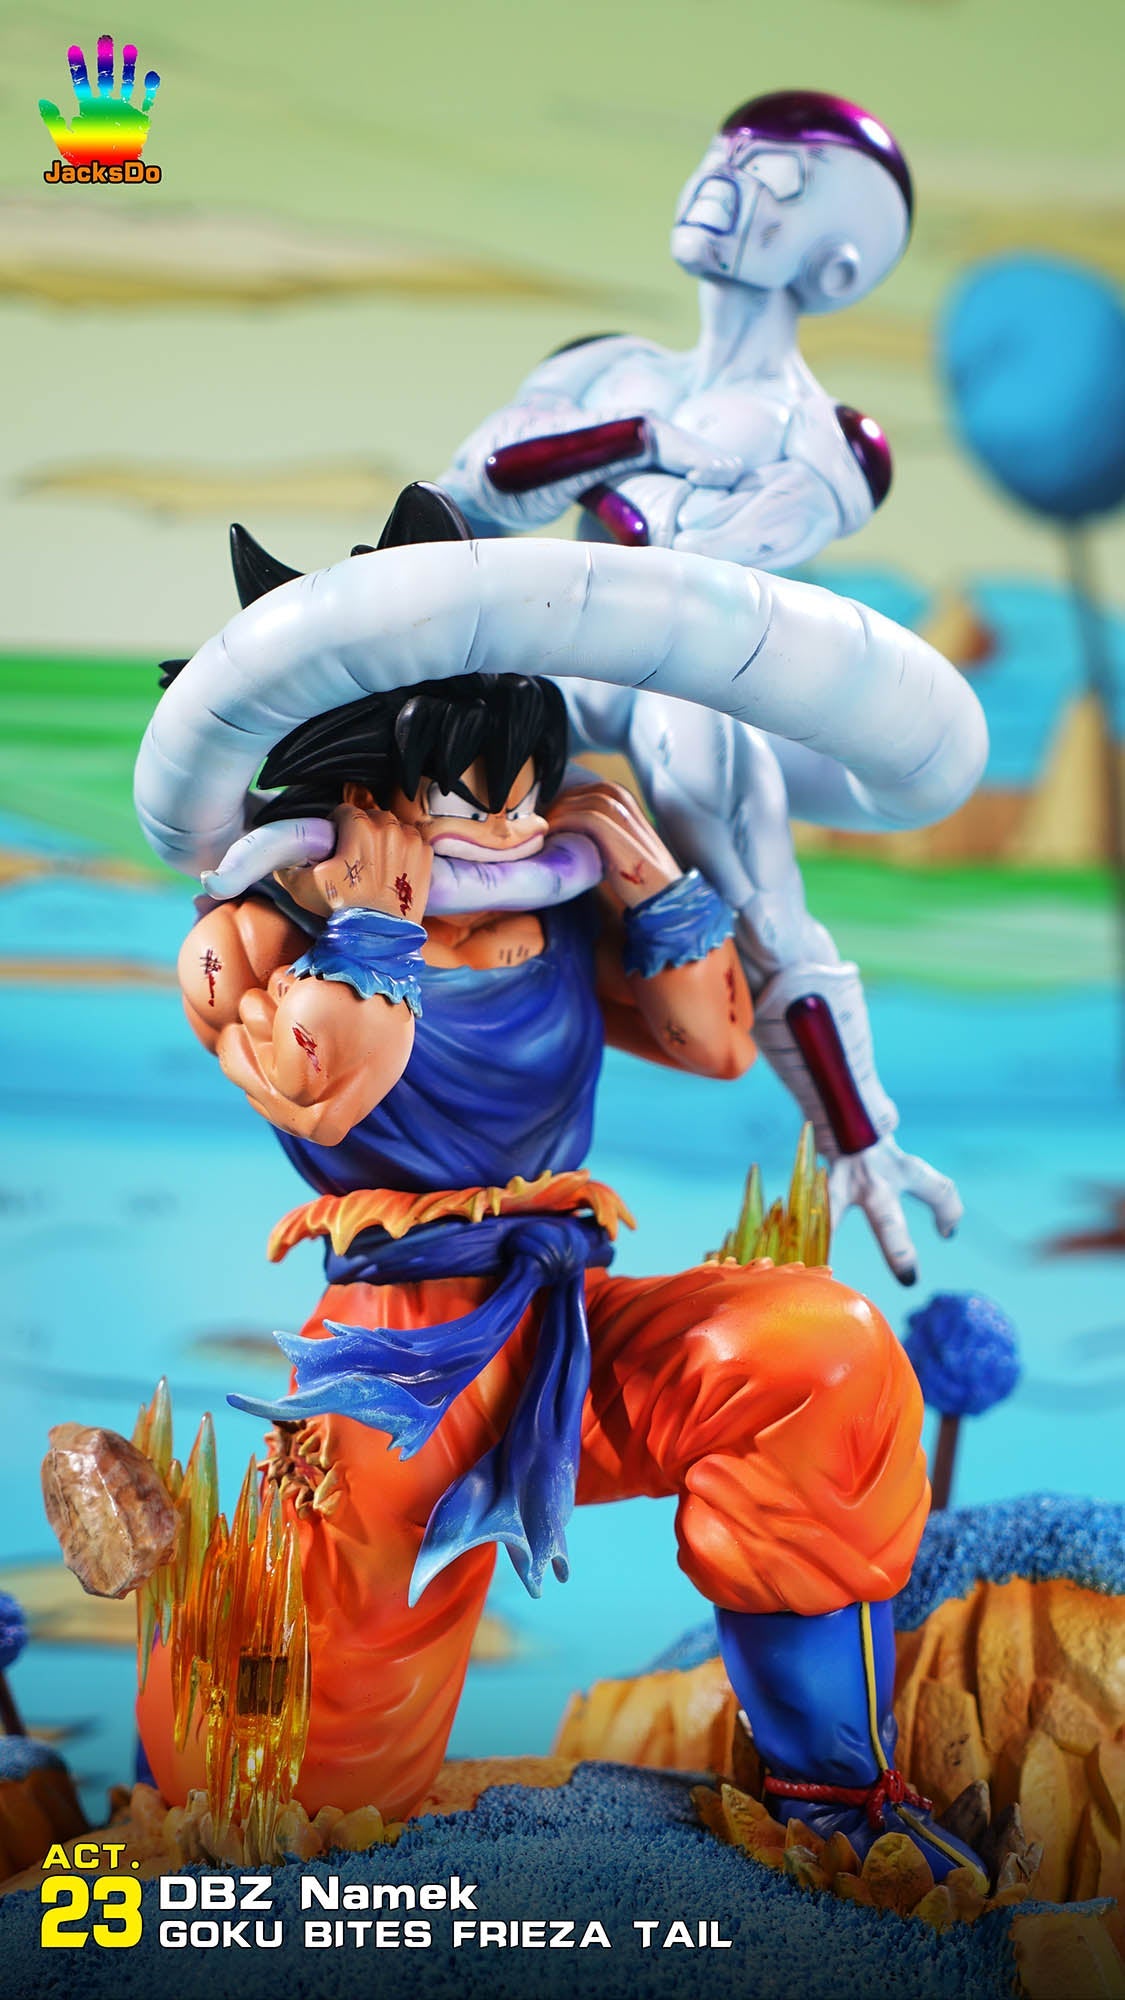 JacksDo - Goku bites Frieza StatueCorp